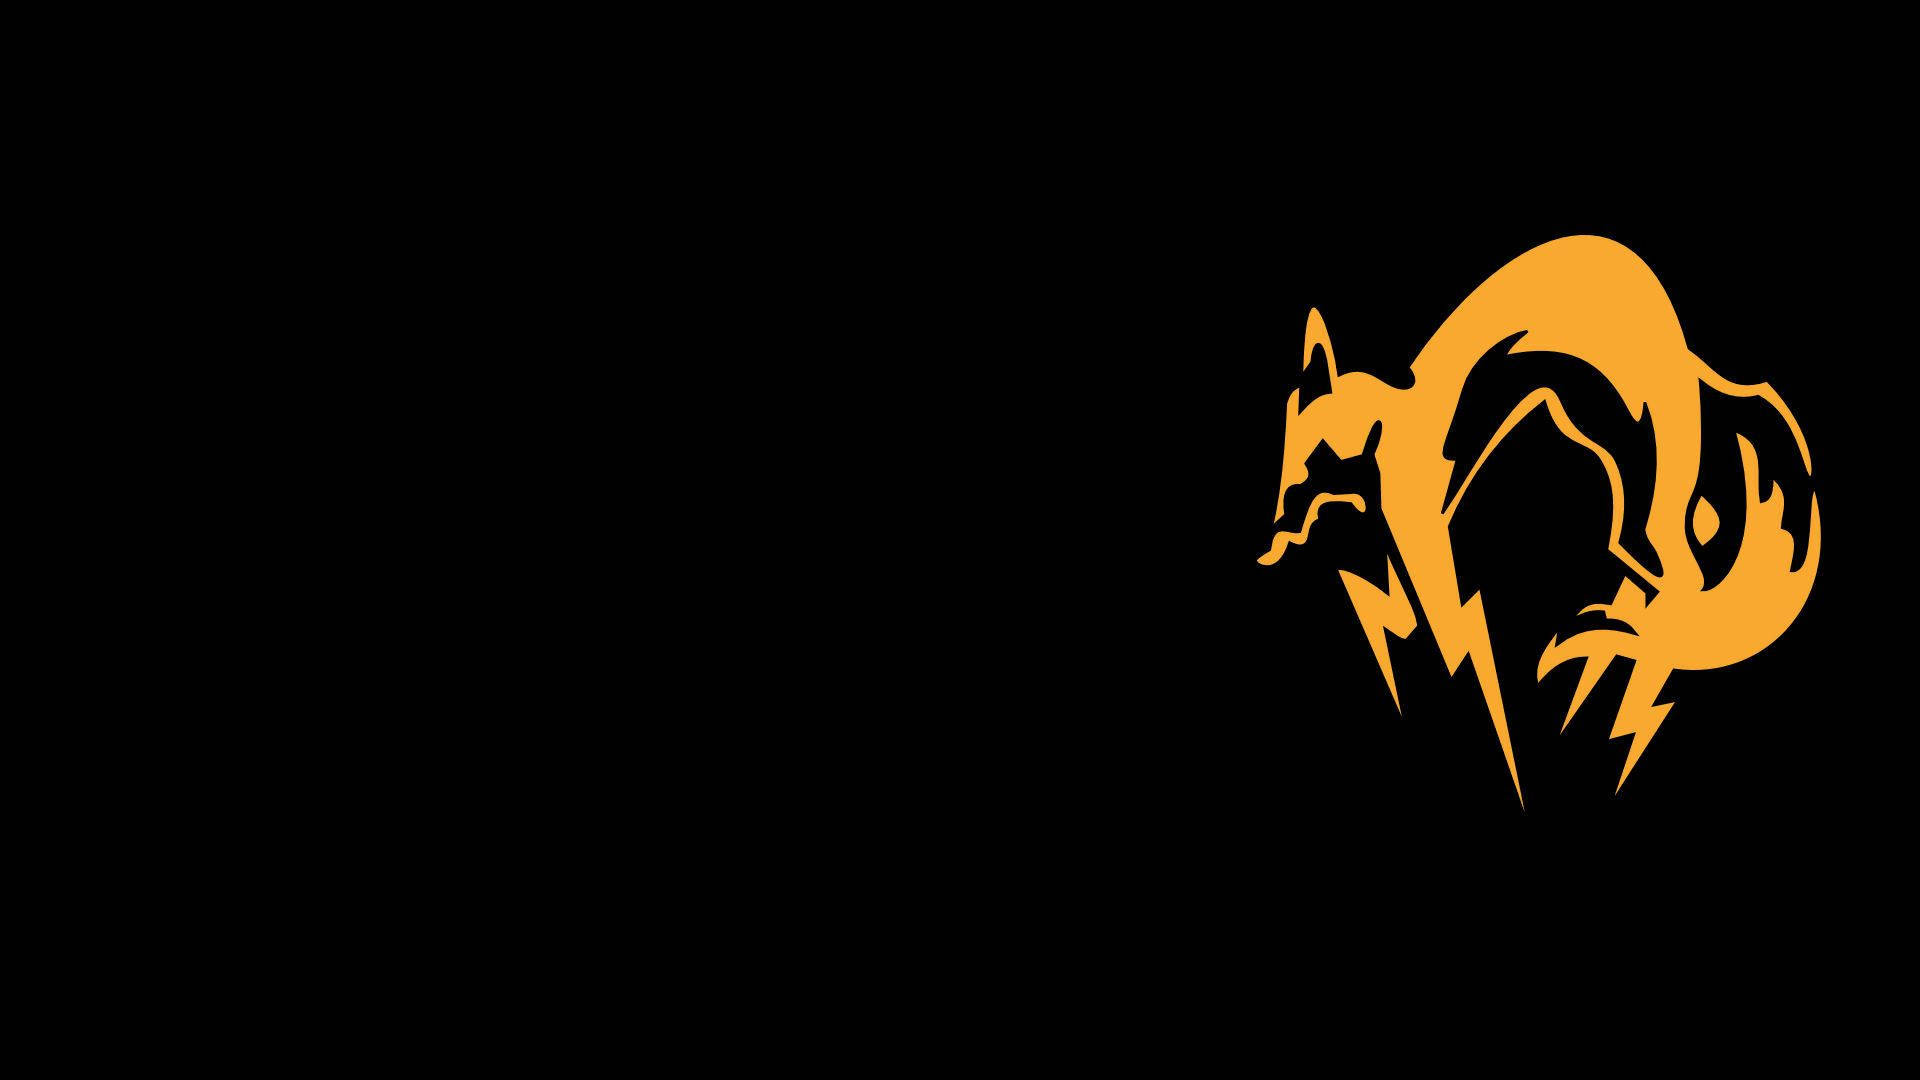 Fox Hound, a legendary mercenary group from the Metal Gear Solid series. Wallpaper